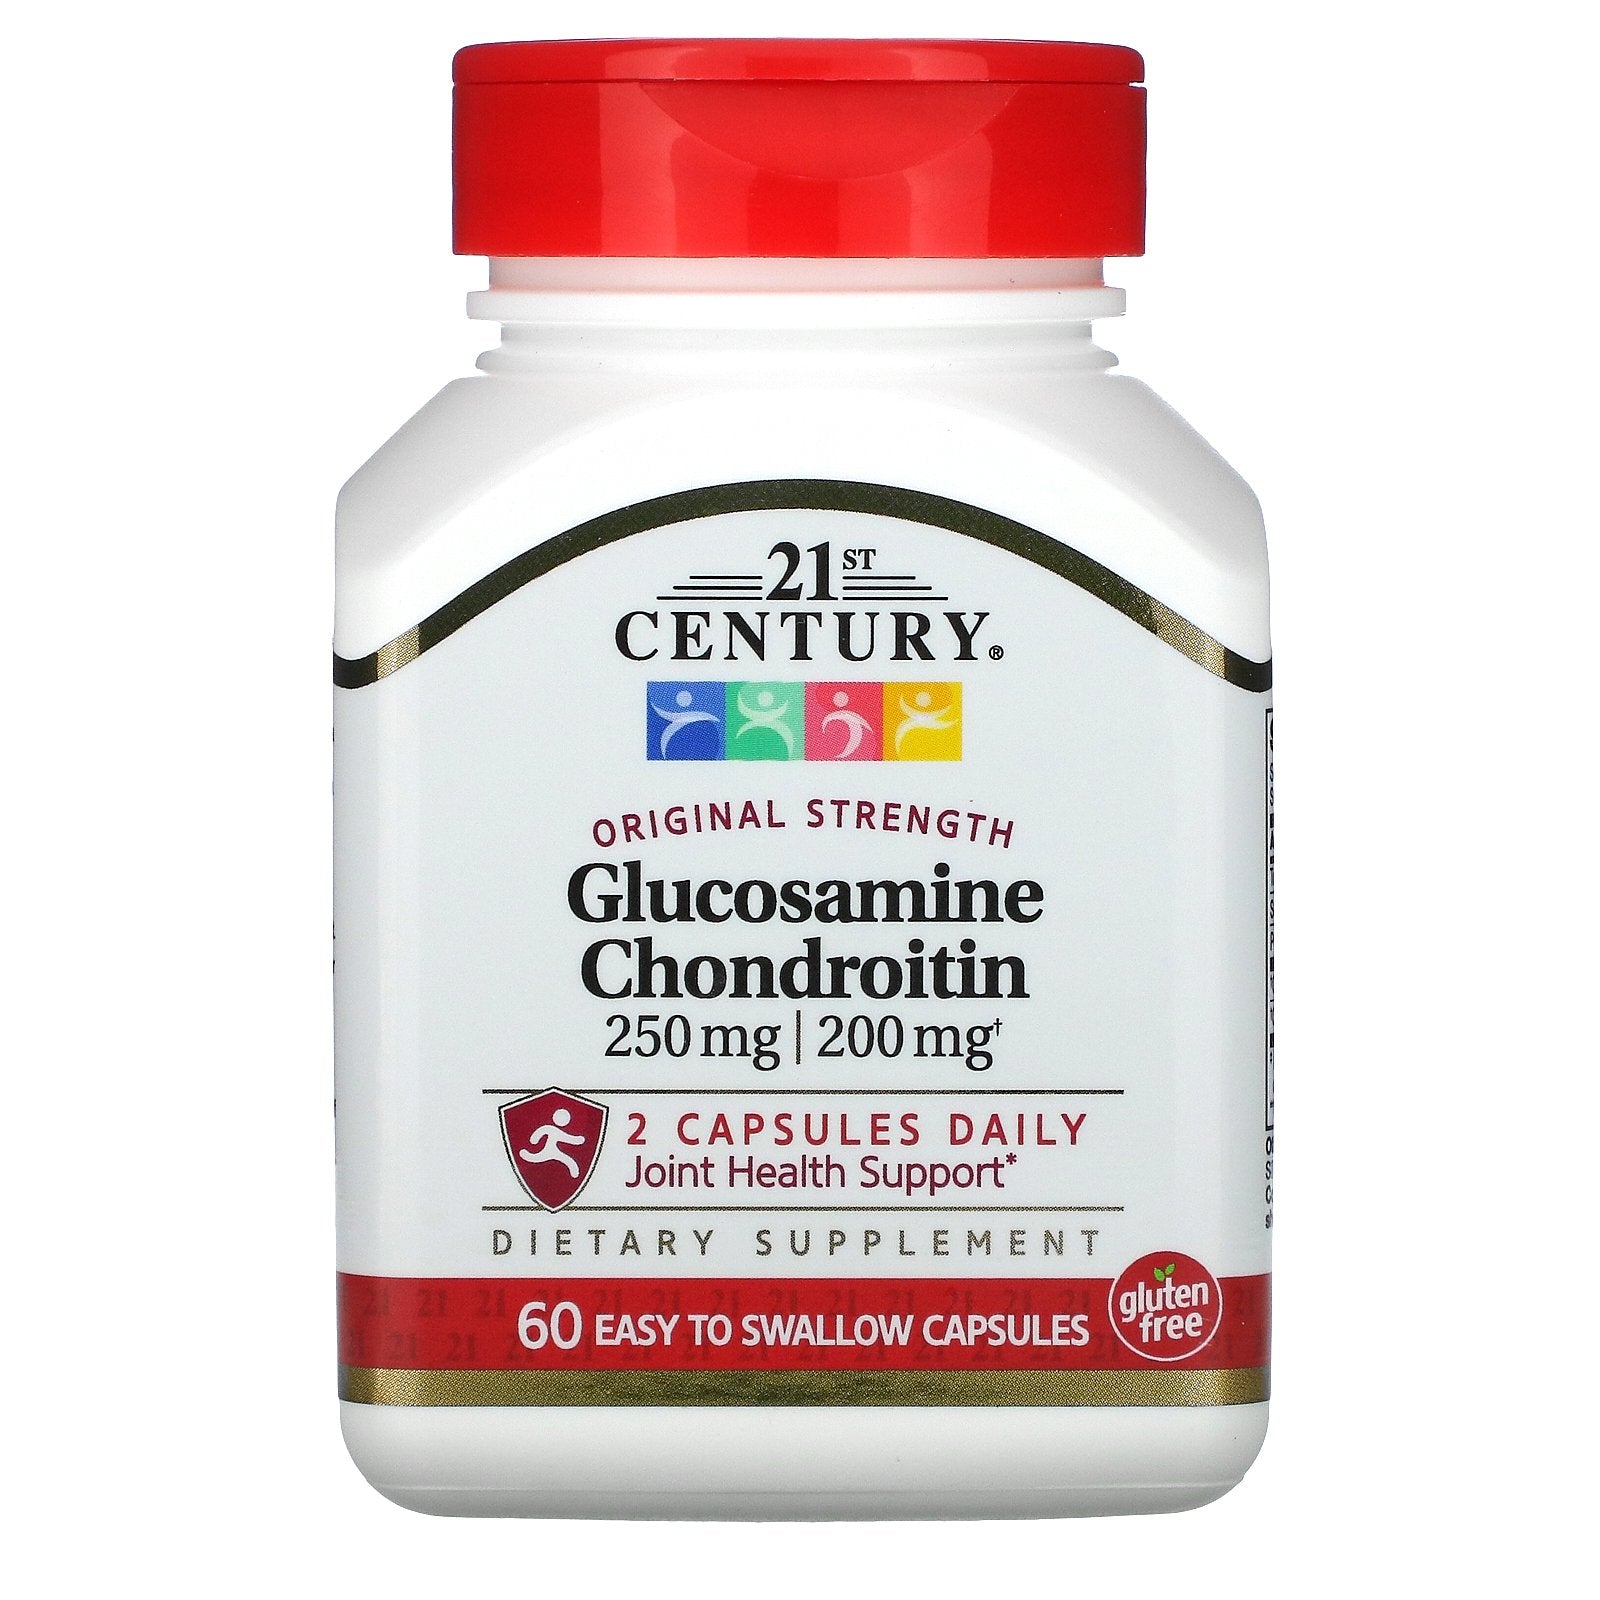 21st Century, Glucosamine / Chondroitin, Original Strength, 250 mg / 200 mg, 60 Easy to Swallow Capsules